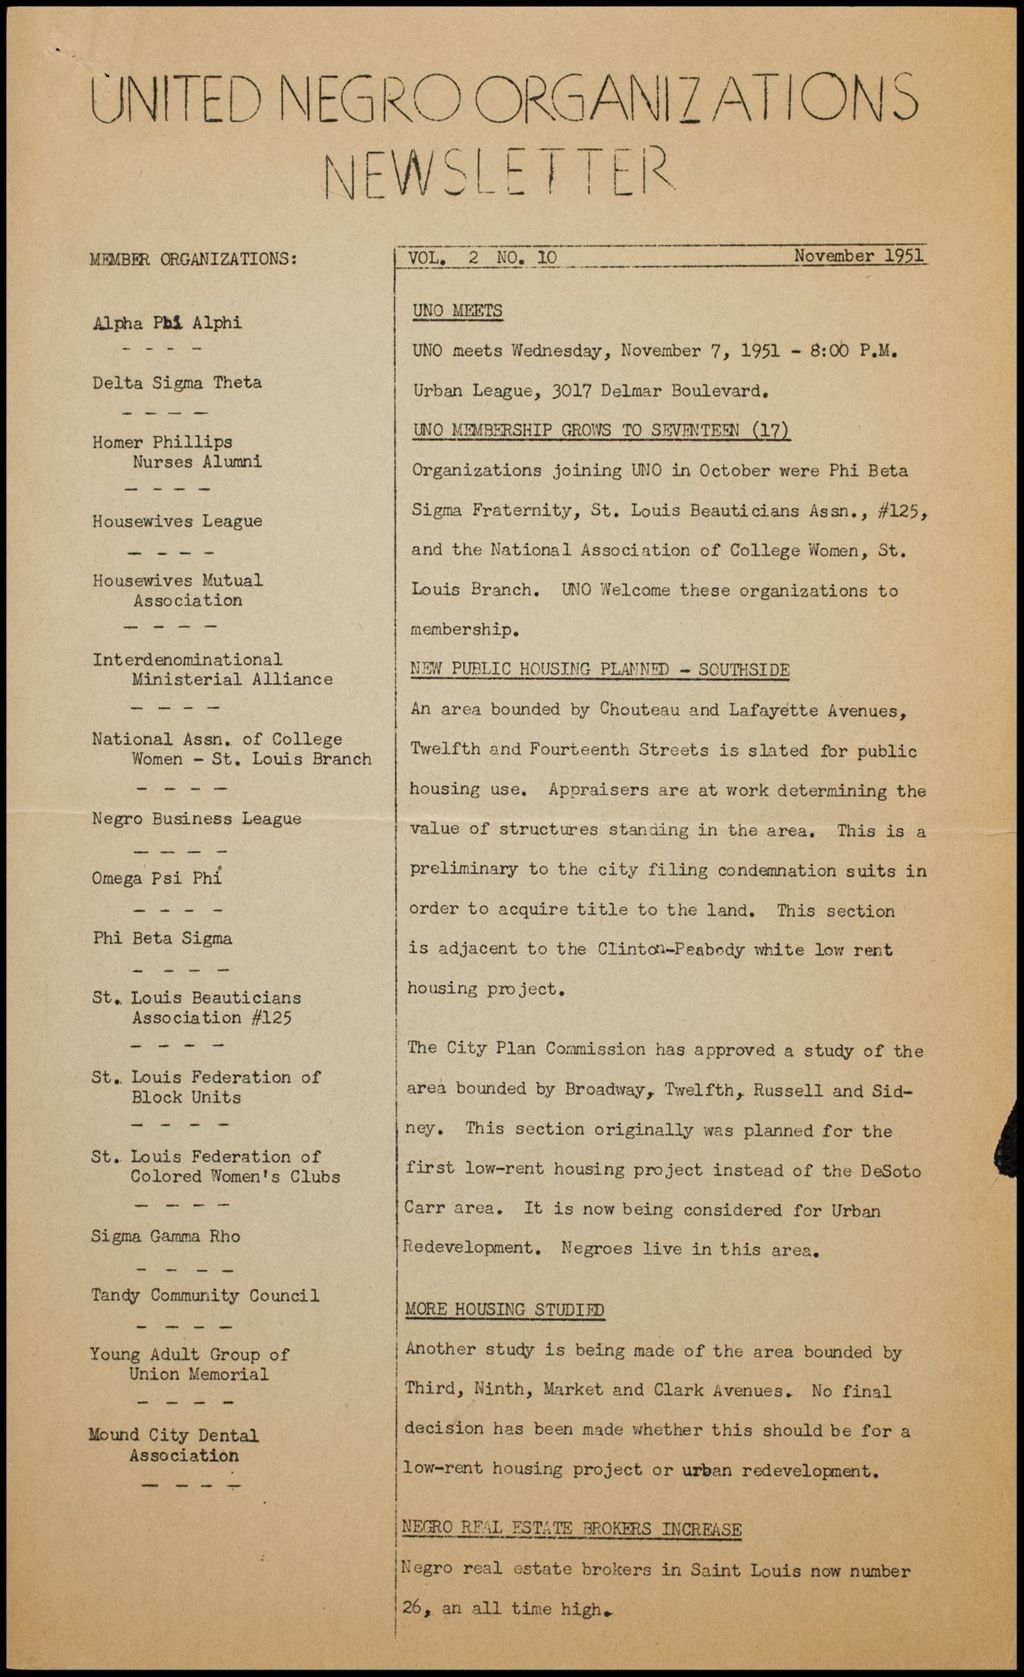 Miniature of United Negro Organizations newsletters, 1951-1952 (Folder I-2657)